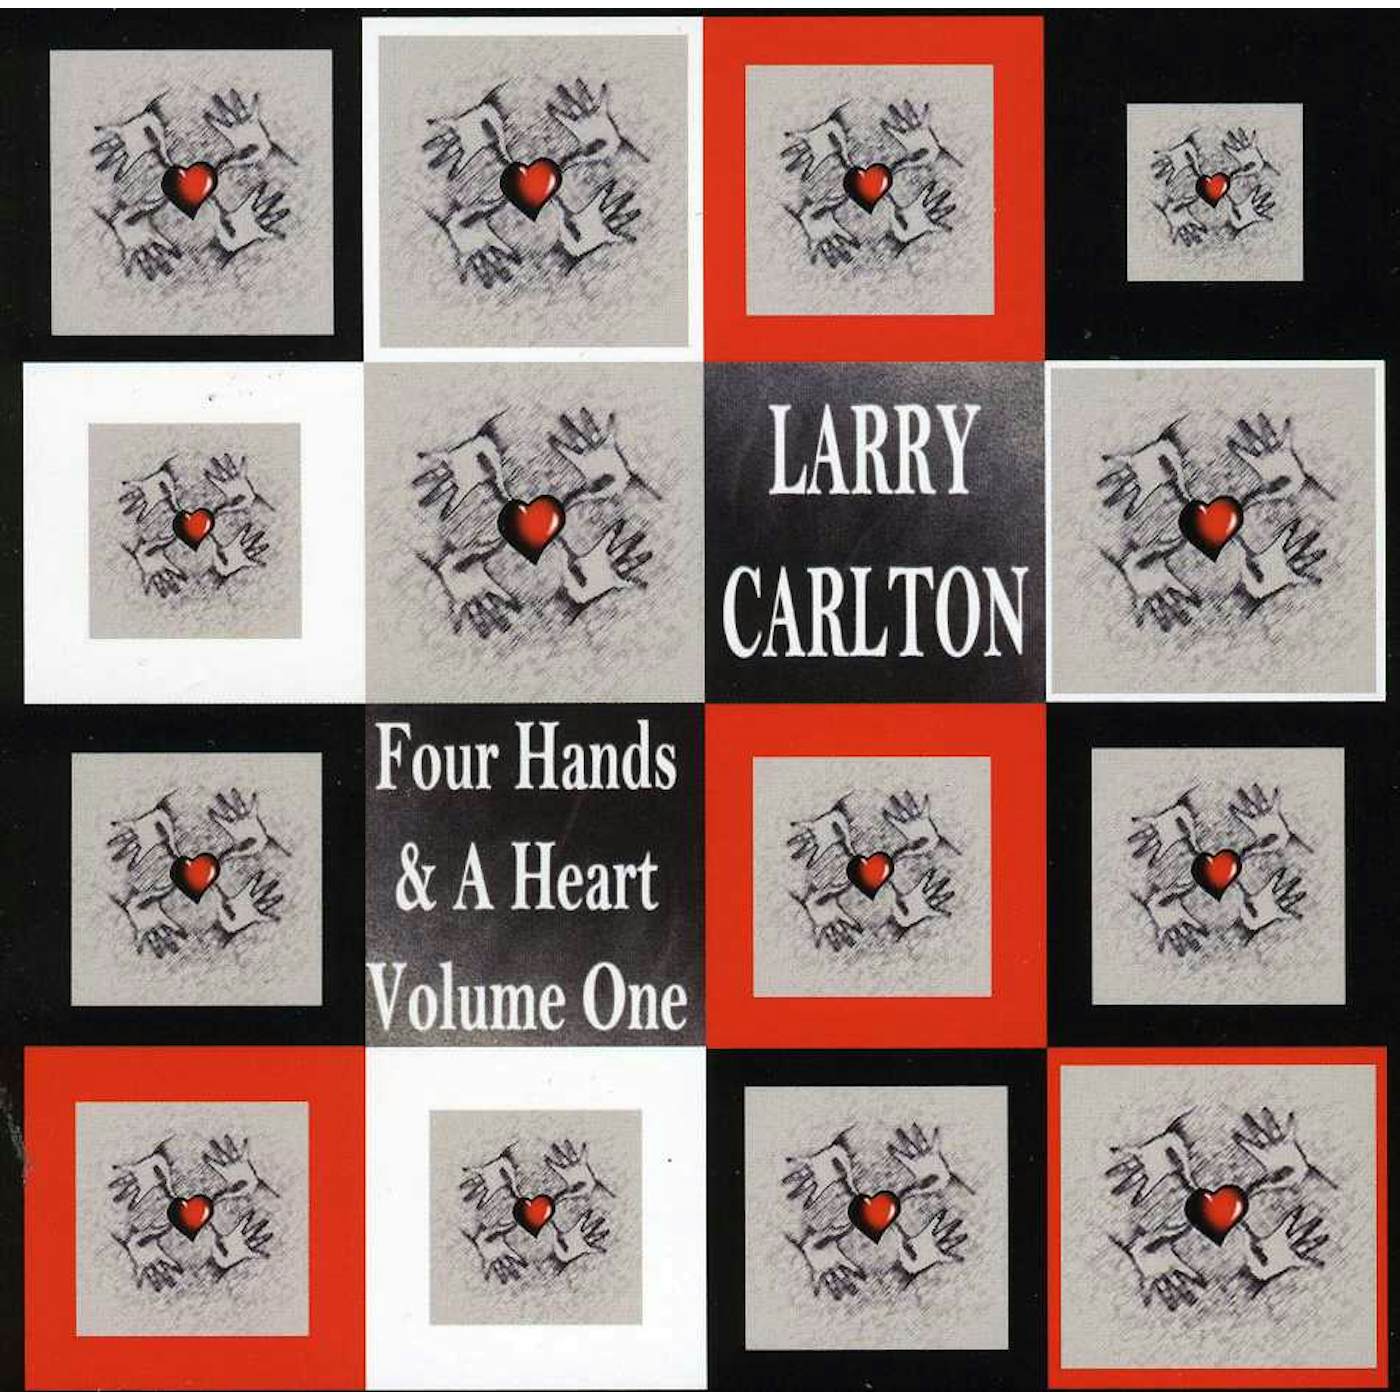 Larry Carlton FOUR HANDS & A HEART 1 CD